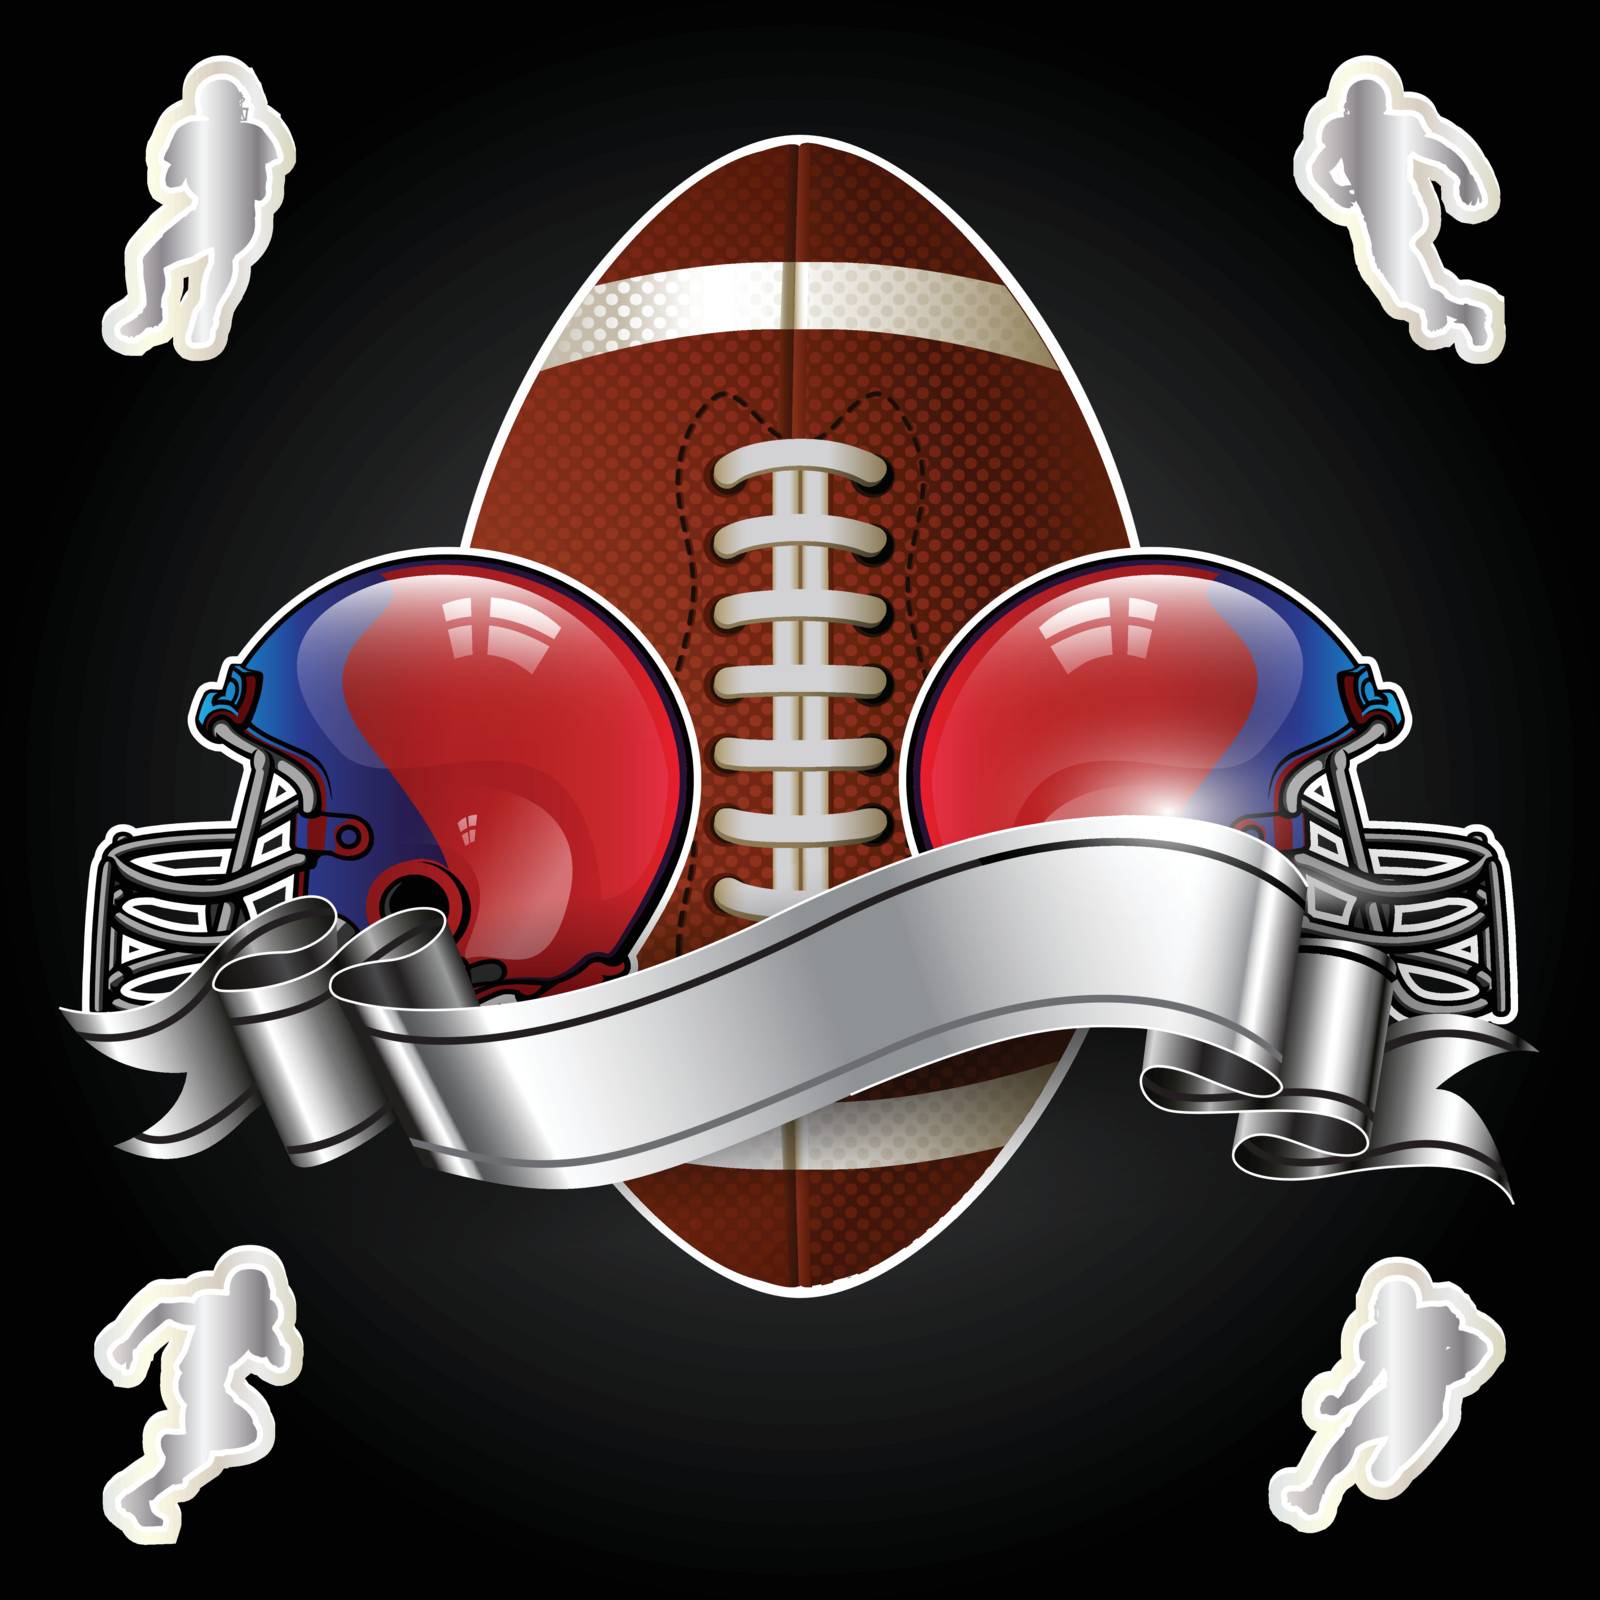 Emblem of American football with helmet on black background